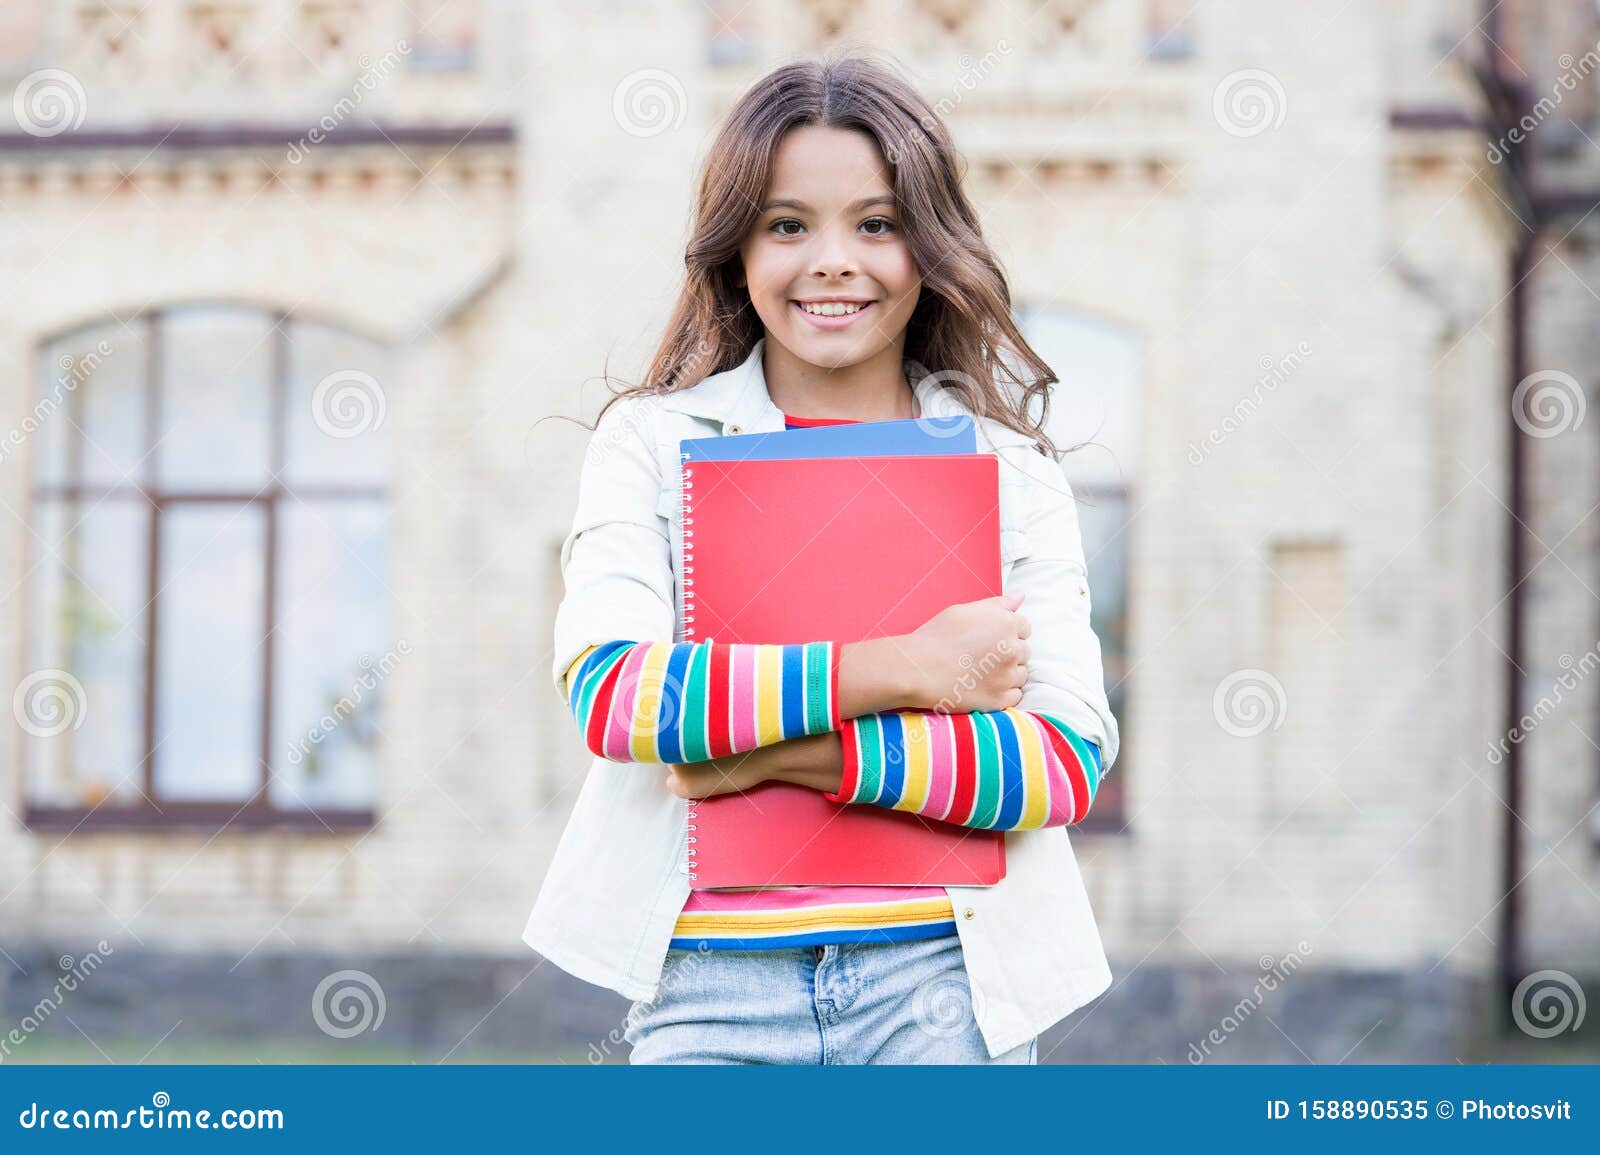 modern education. kid smiling girl school student hold workbooks textbooks for studying. education for gifted children